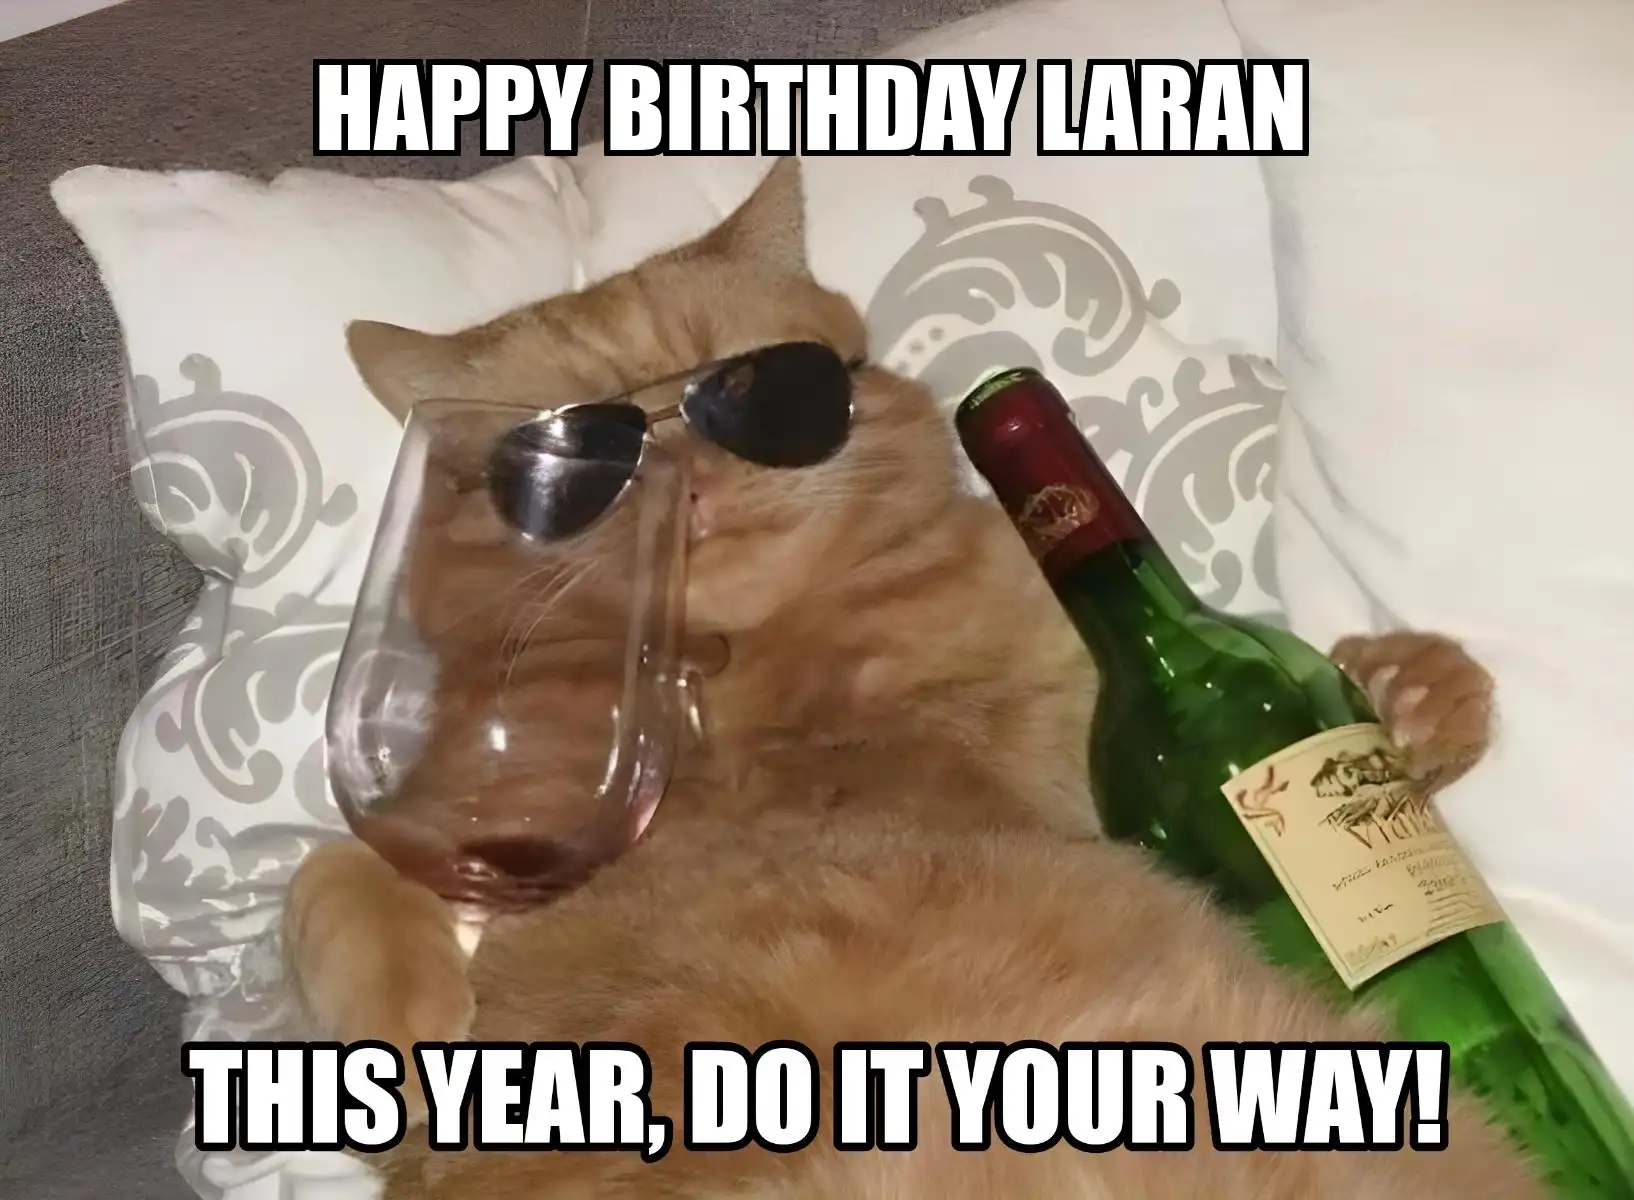 Happy Birthday Laran This Year Do It Your Way Meme